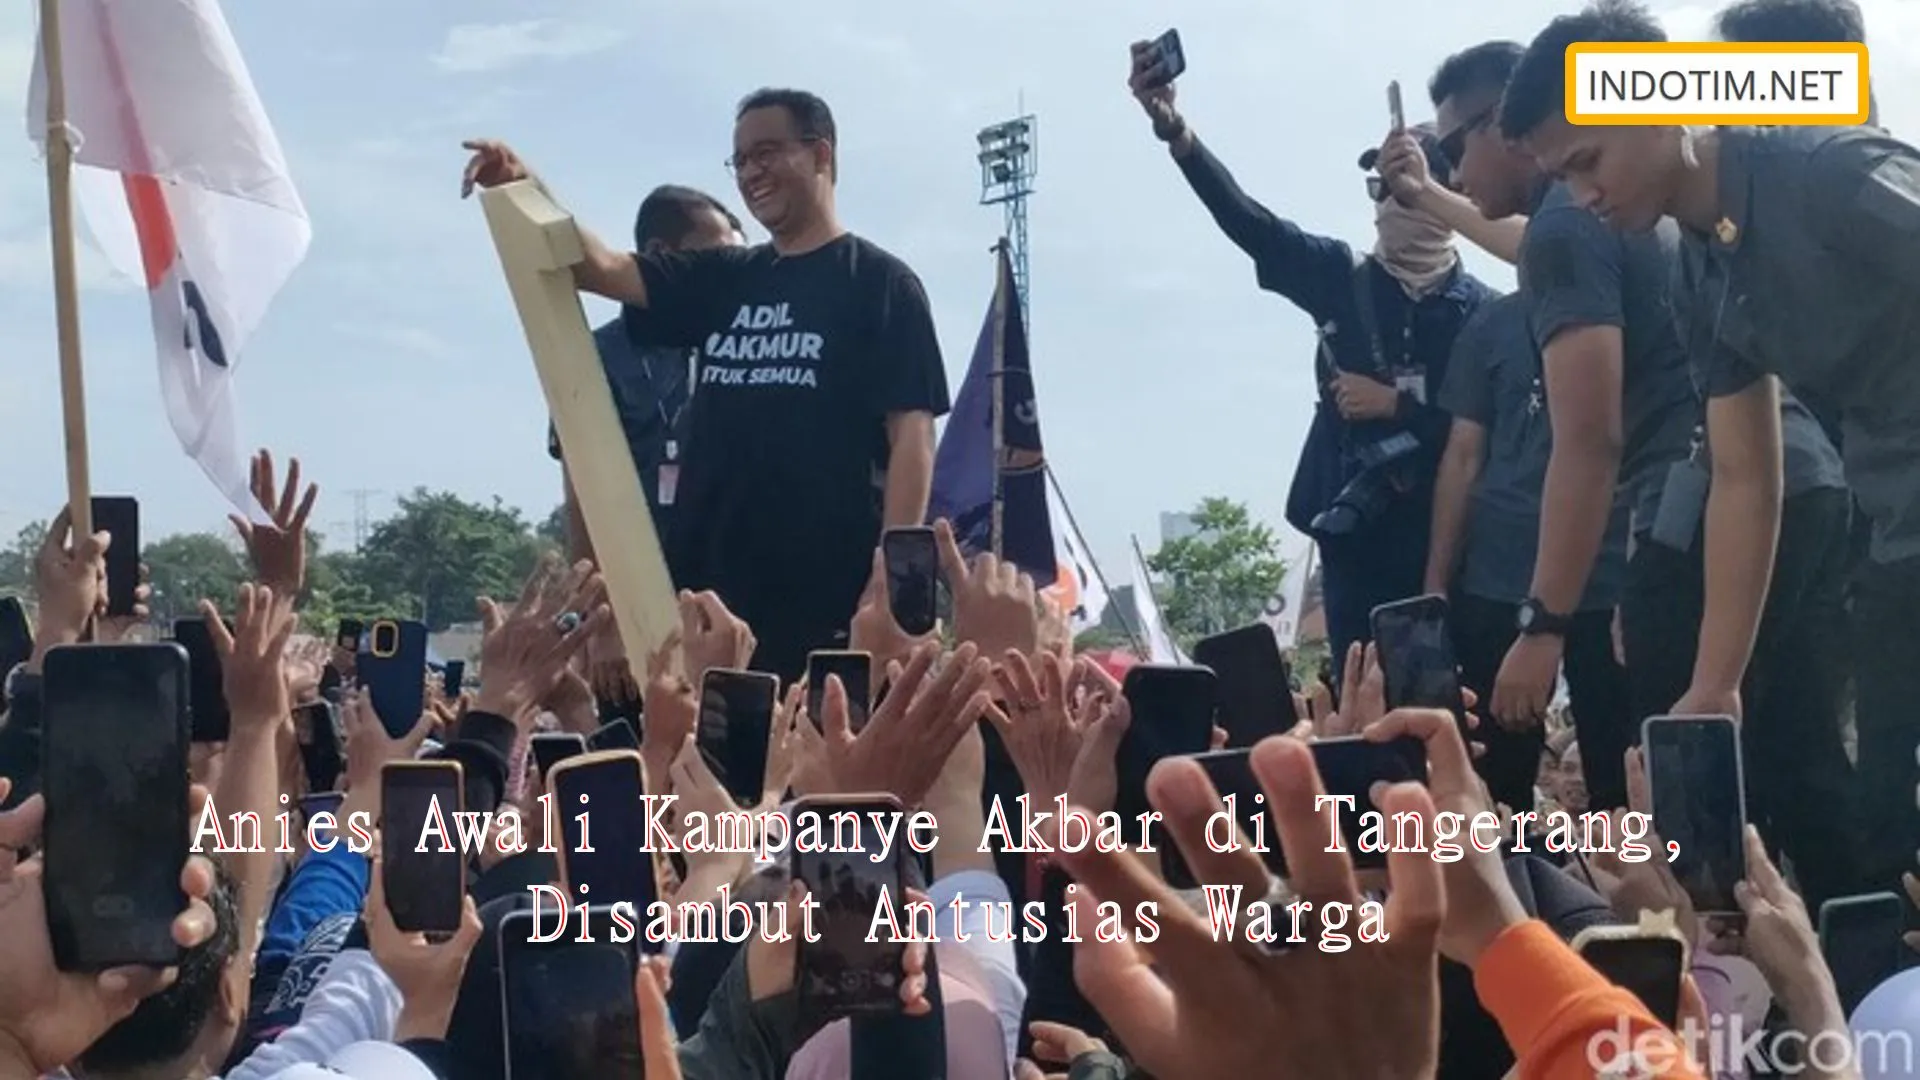 Anies Awali Kampanye Akbar di Tangerang, Disambut Antusias Warga